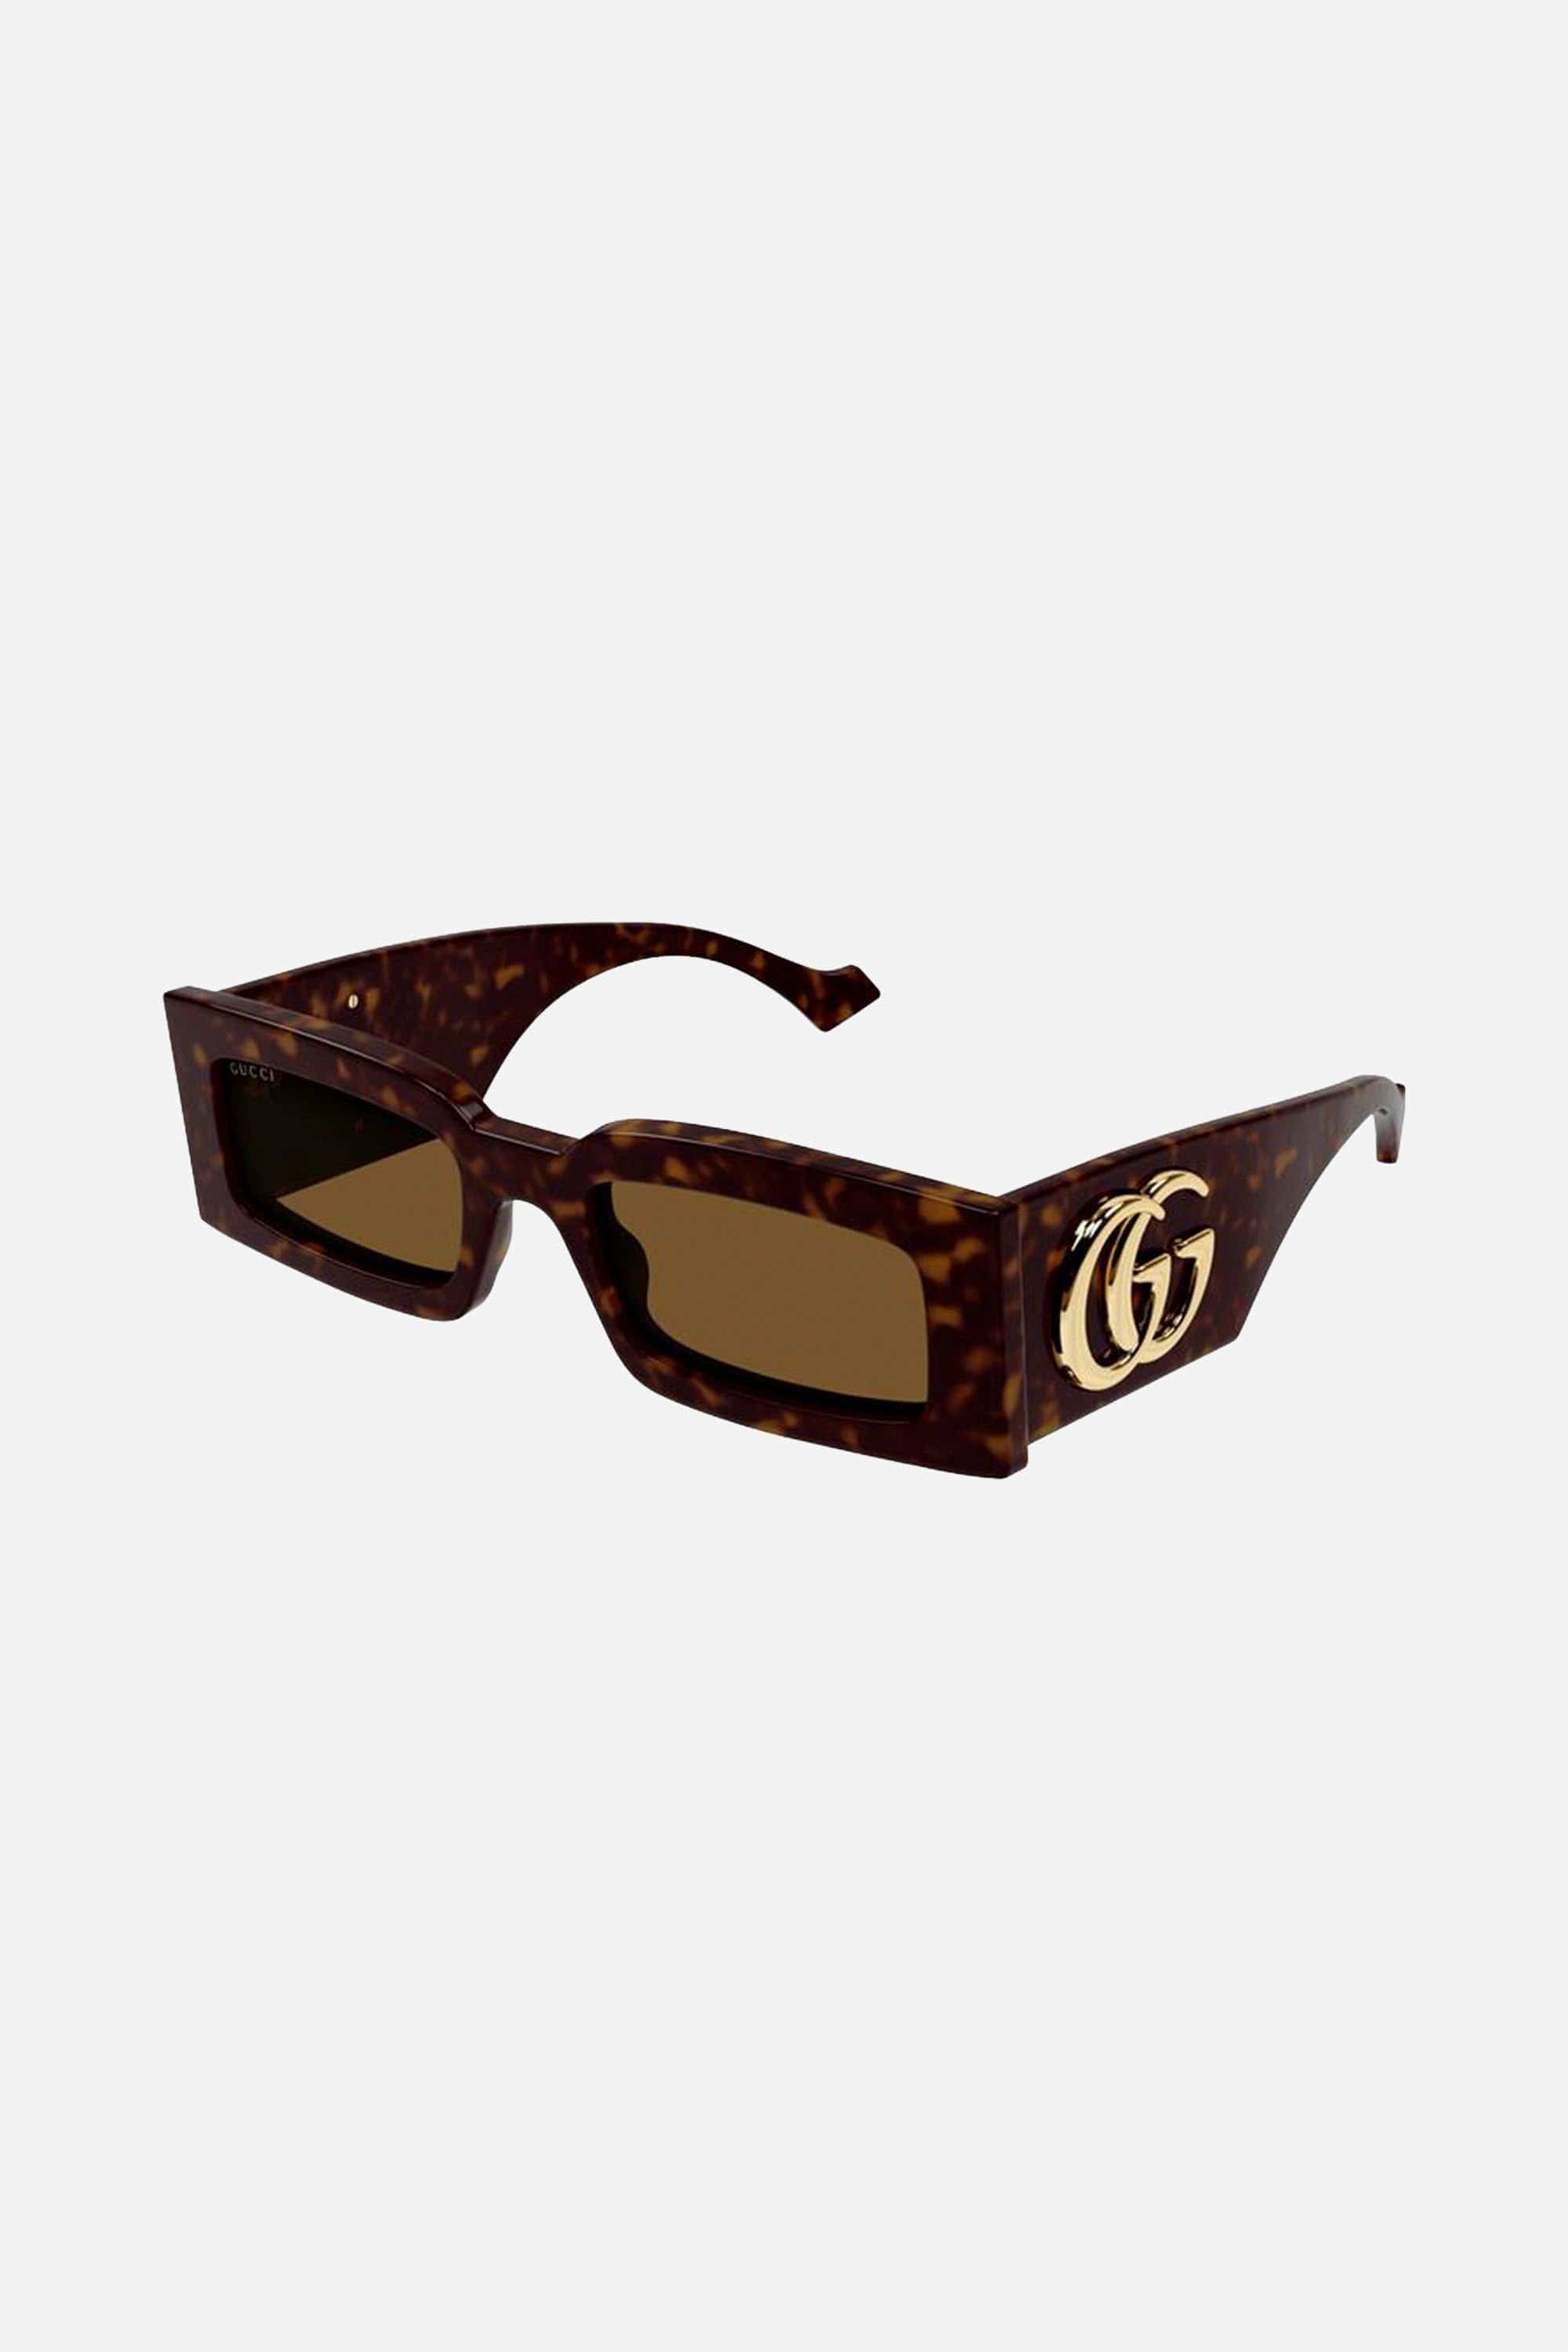 Gucci havana rectangular sunglasses - Eyewear Club